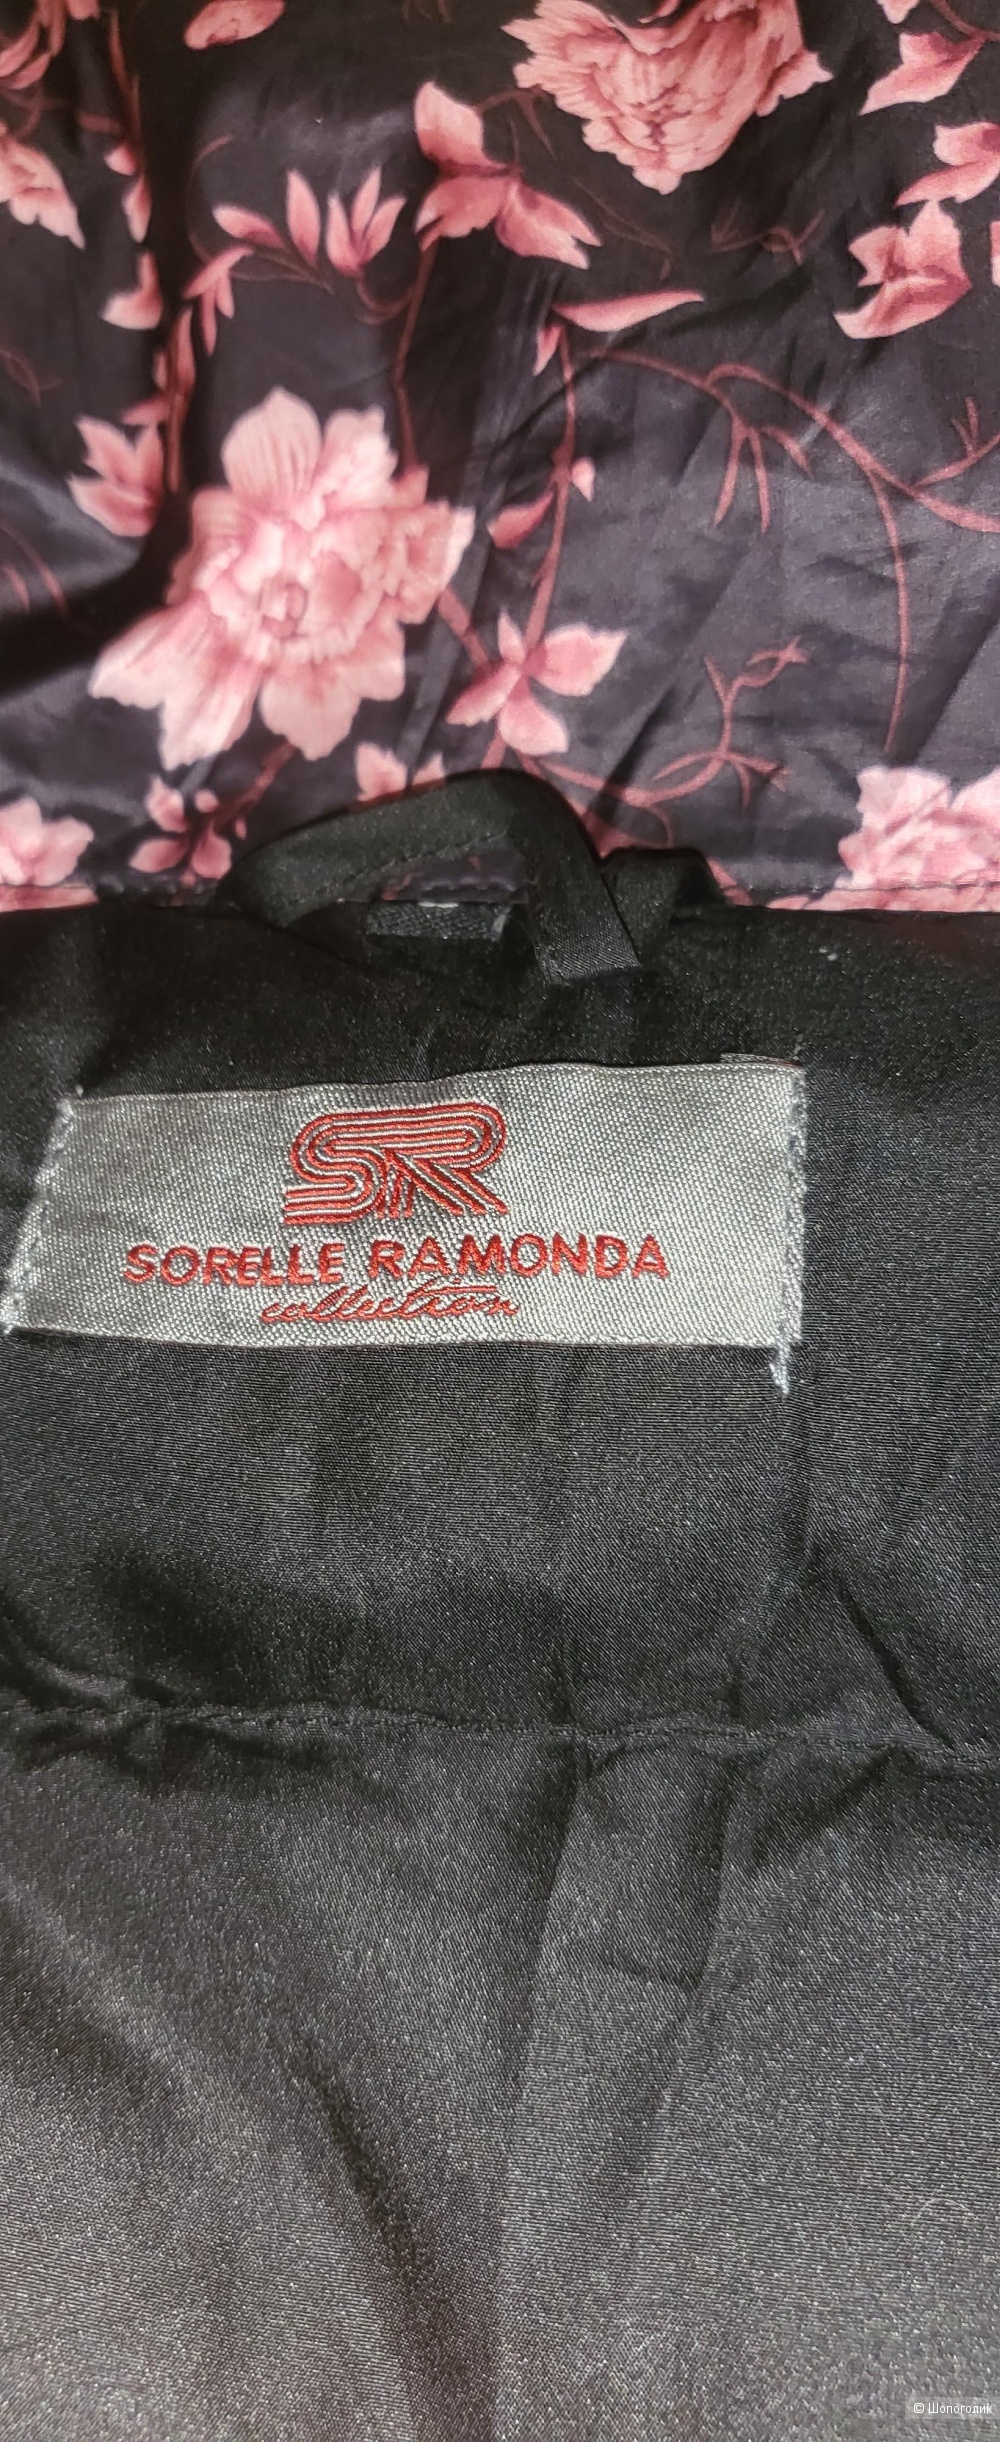 Пуховик Sorelle Ramonda collection, S